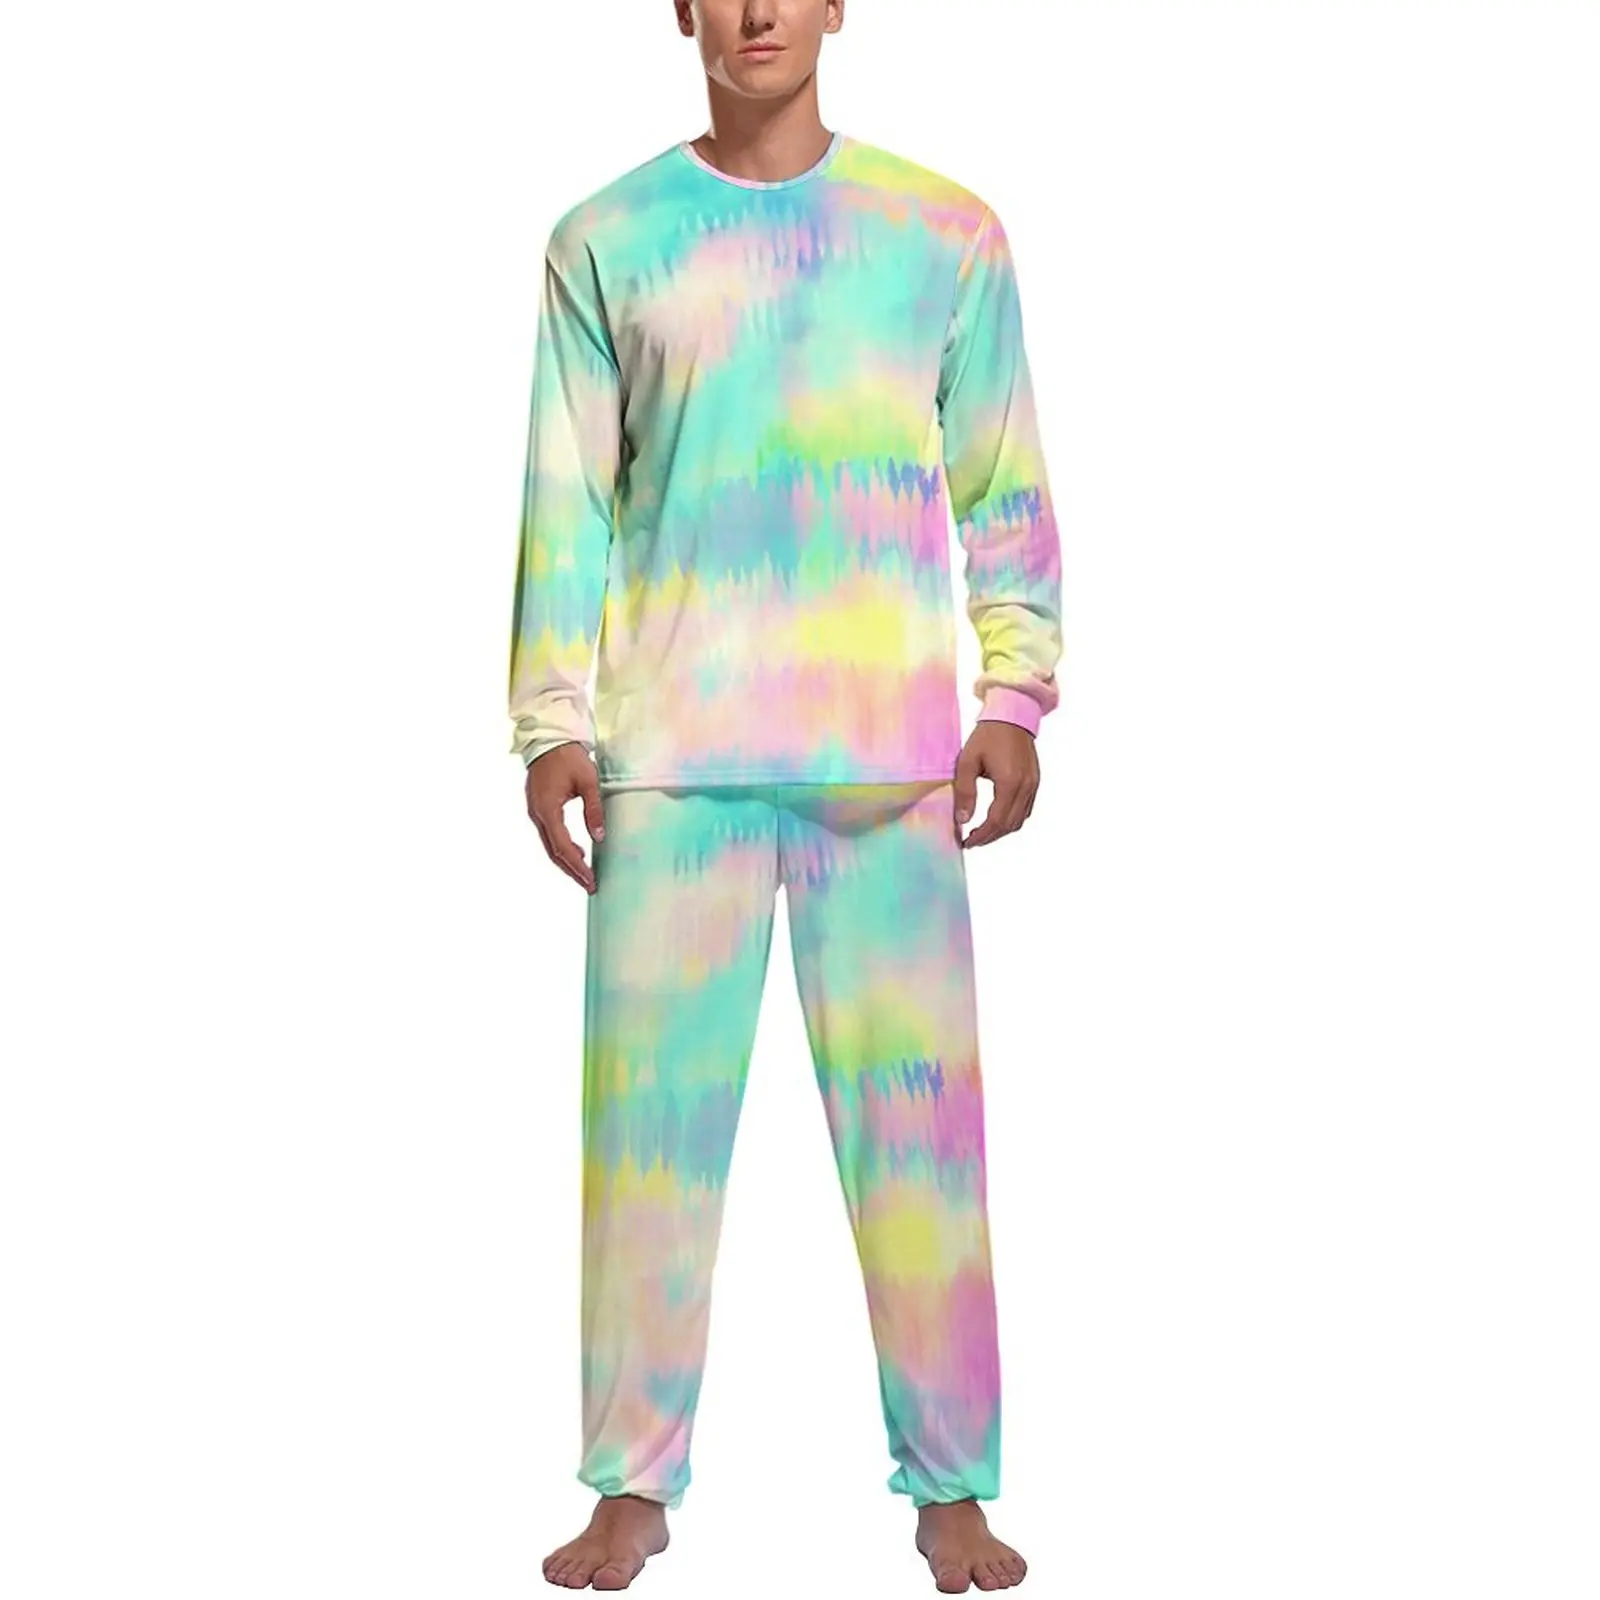 Colorful Tie Dye Pajamas Daily 2 Piece Modern Rainbow Print Cool Pajama Sets Mens Long Sleeves Bedroom Graphic Nightwear